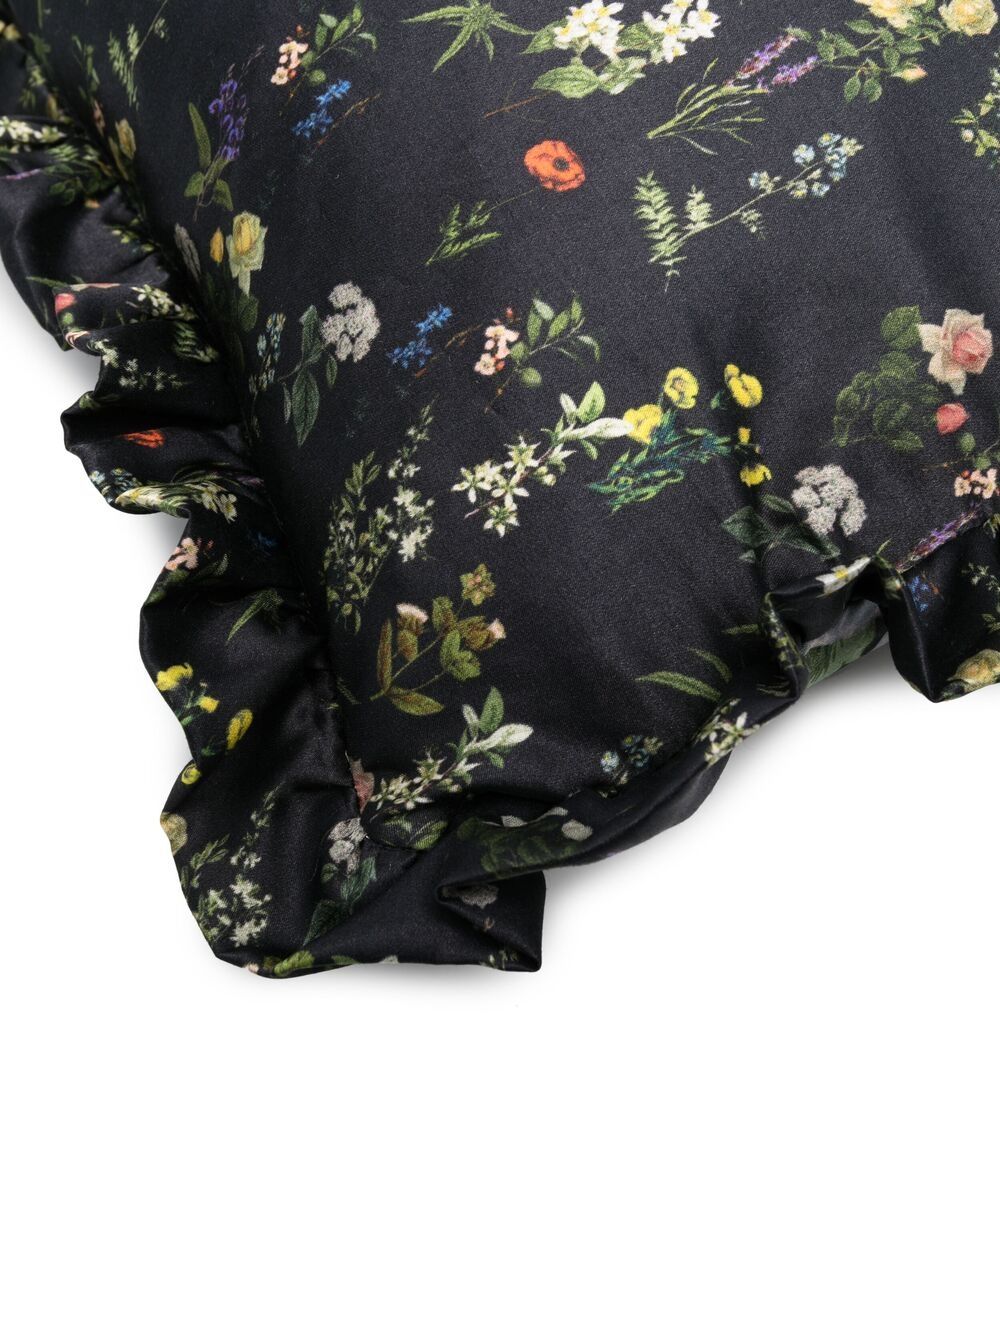 фото Preen by thornton bregazzi подушка с цветочным принтом и оборками